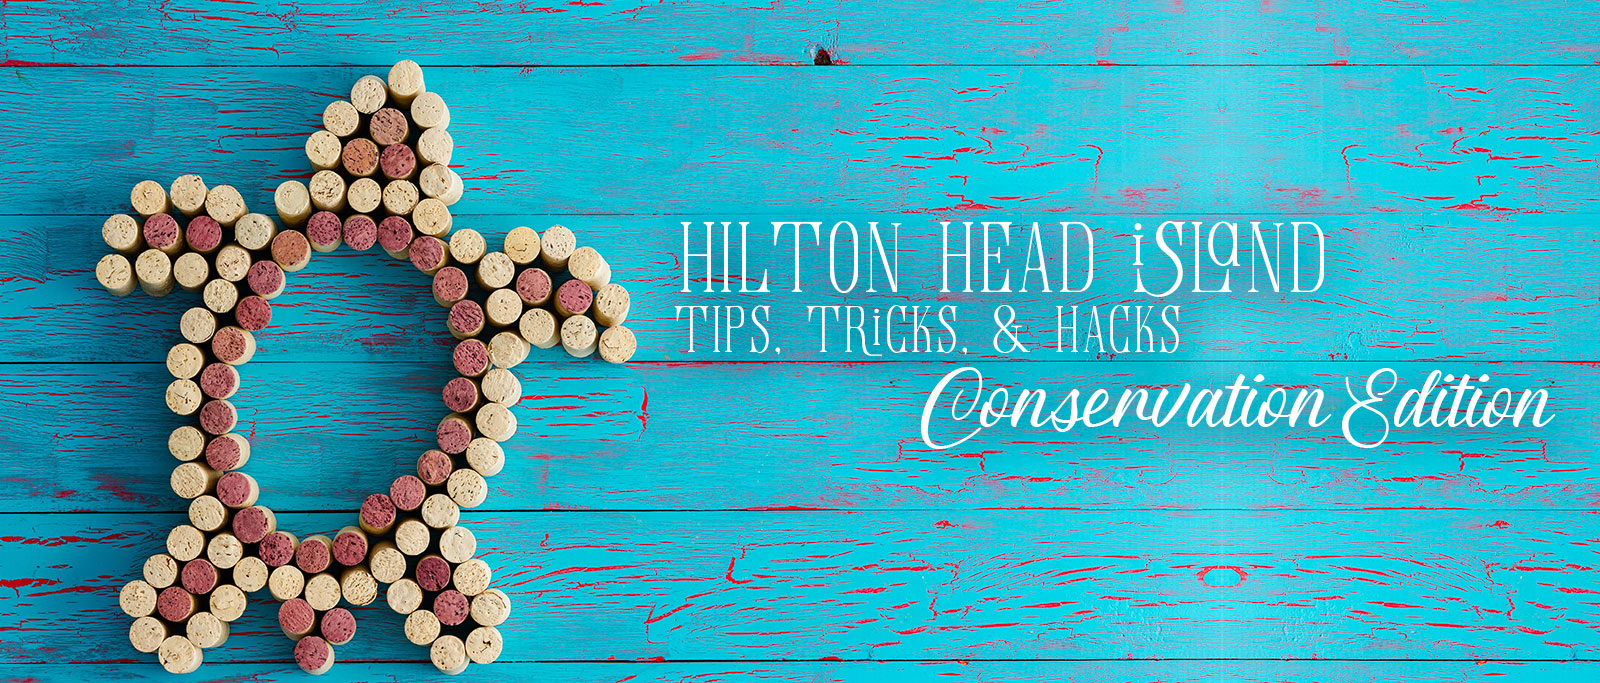 hilton-head-islandcast-episode-29-conservation-edition